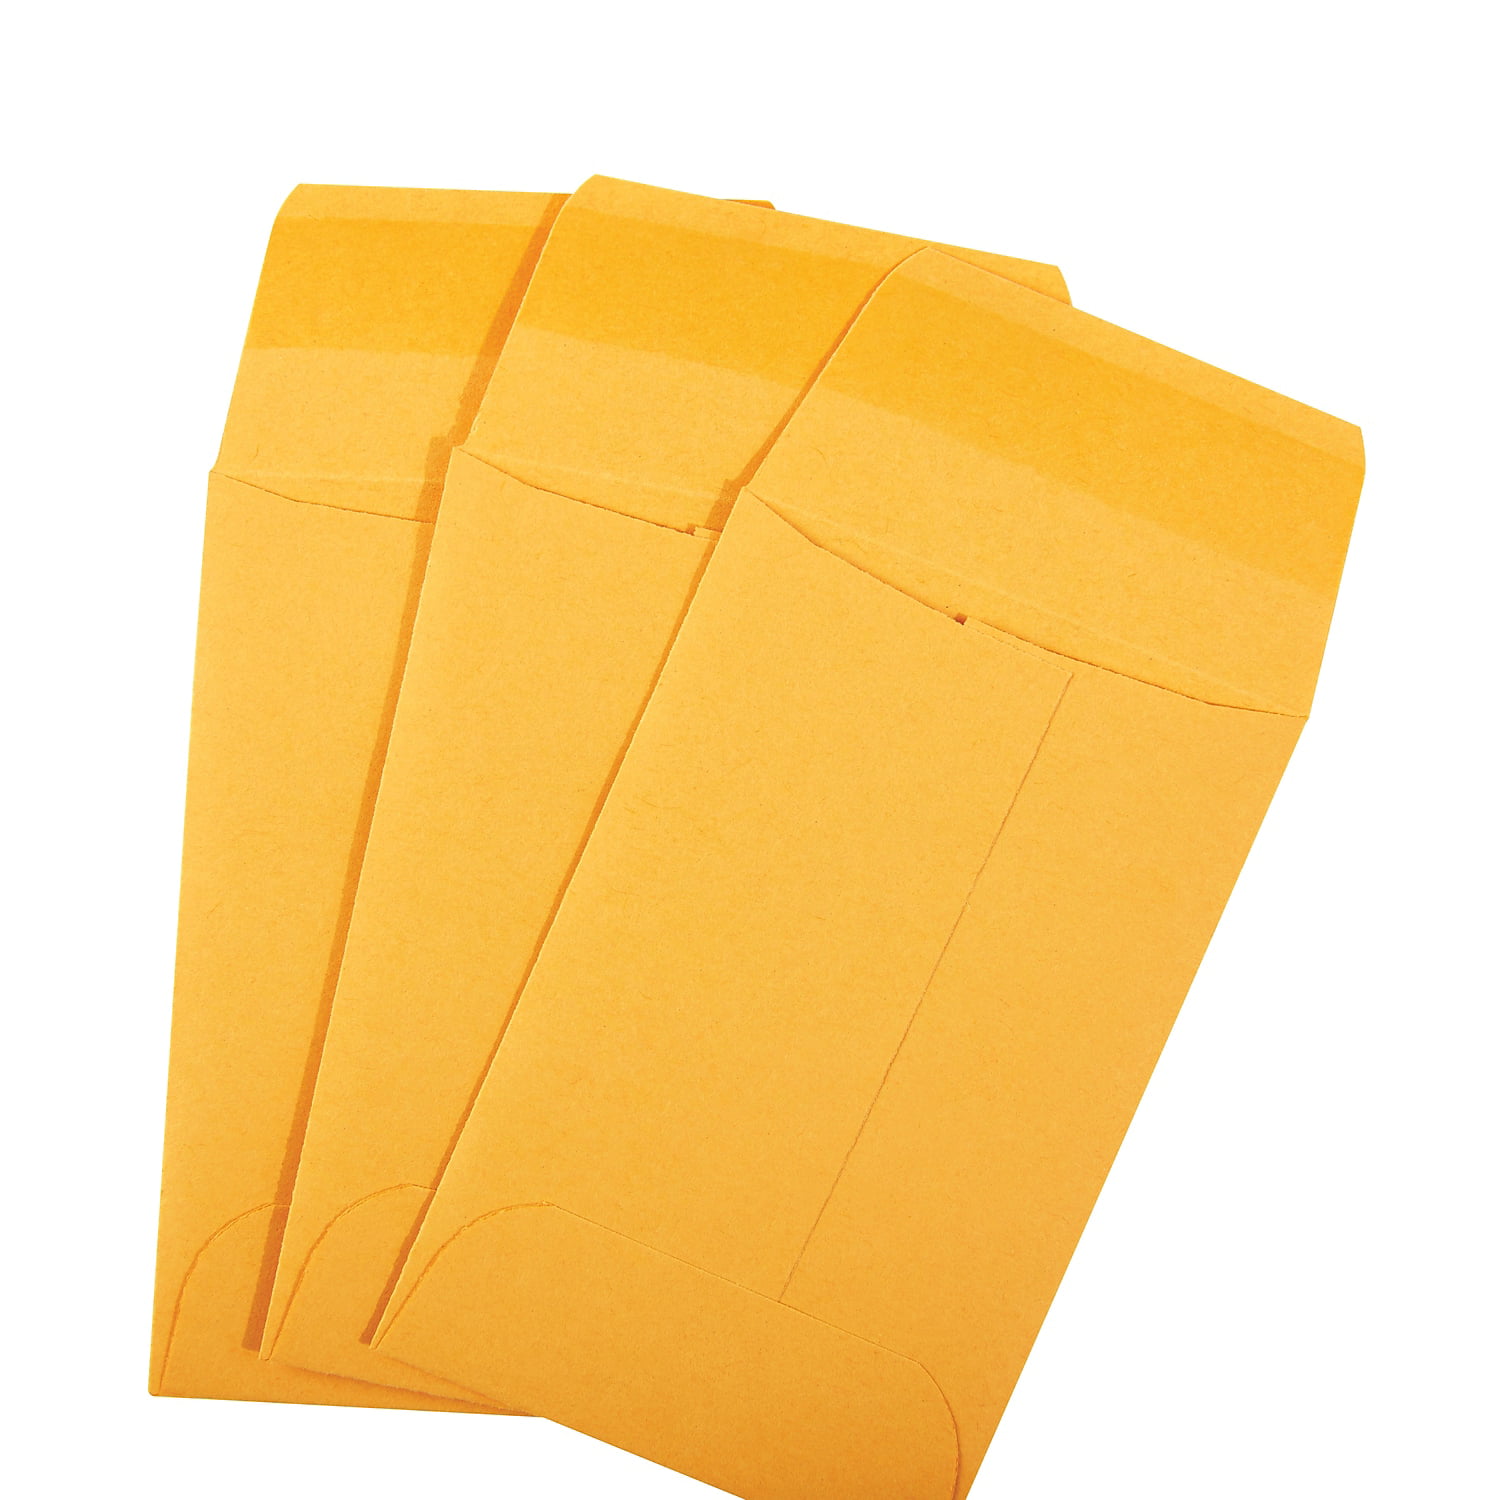 Money Envelopes Small Parts Envelopes with Gummed Seal 3.5 x 6.5 Inches 100 Pack Kraft Cash Envelopes